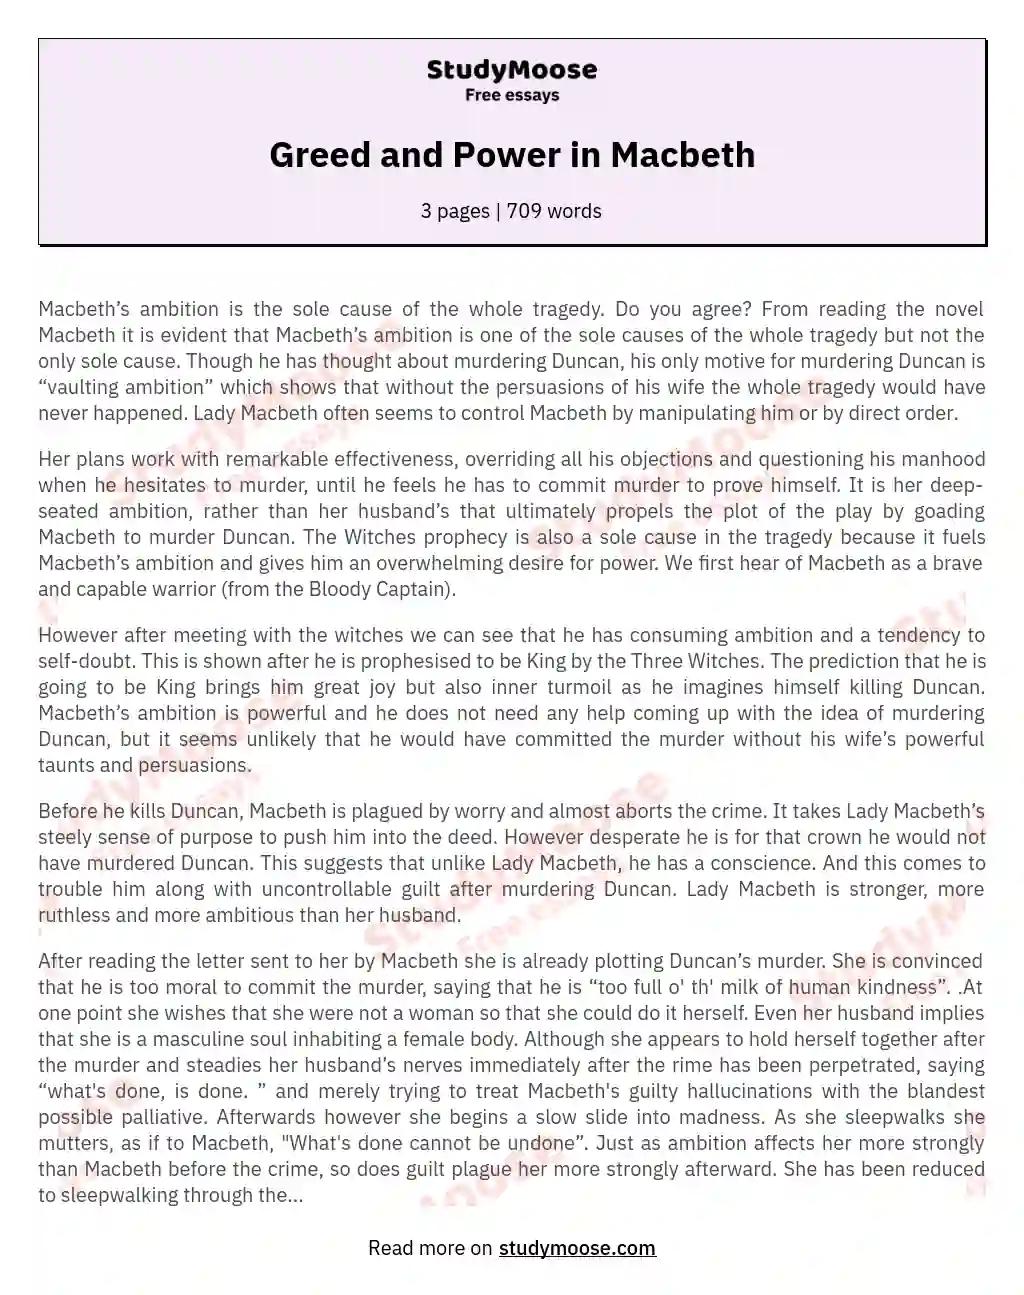 macbeth essay on greed